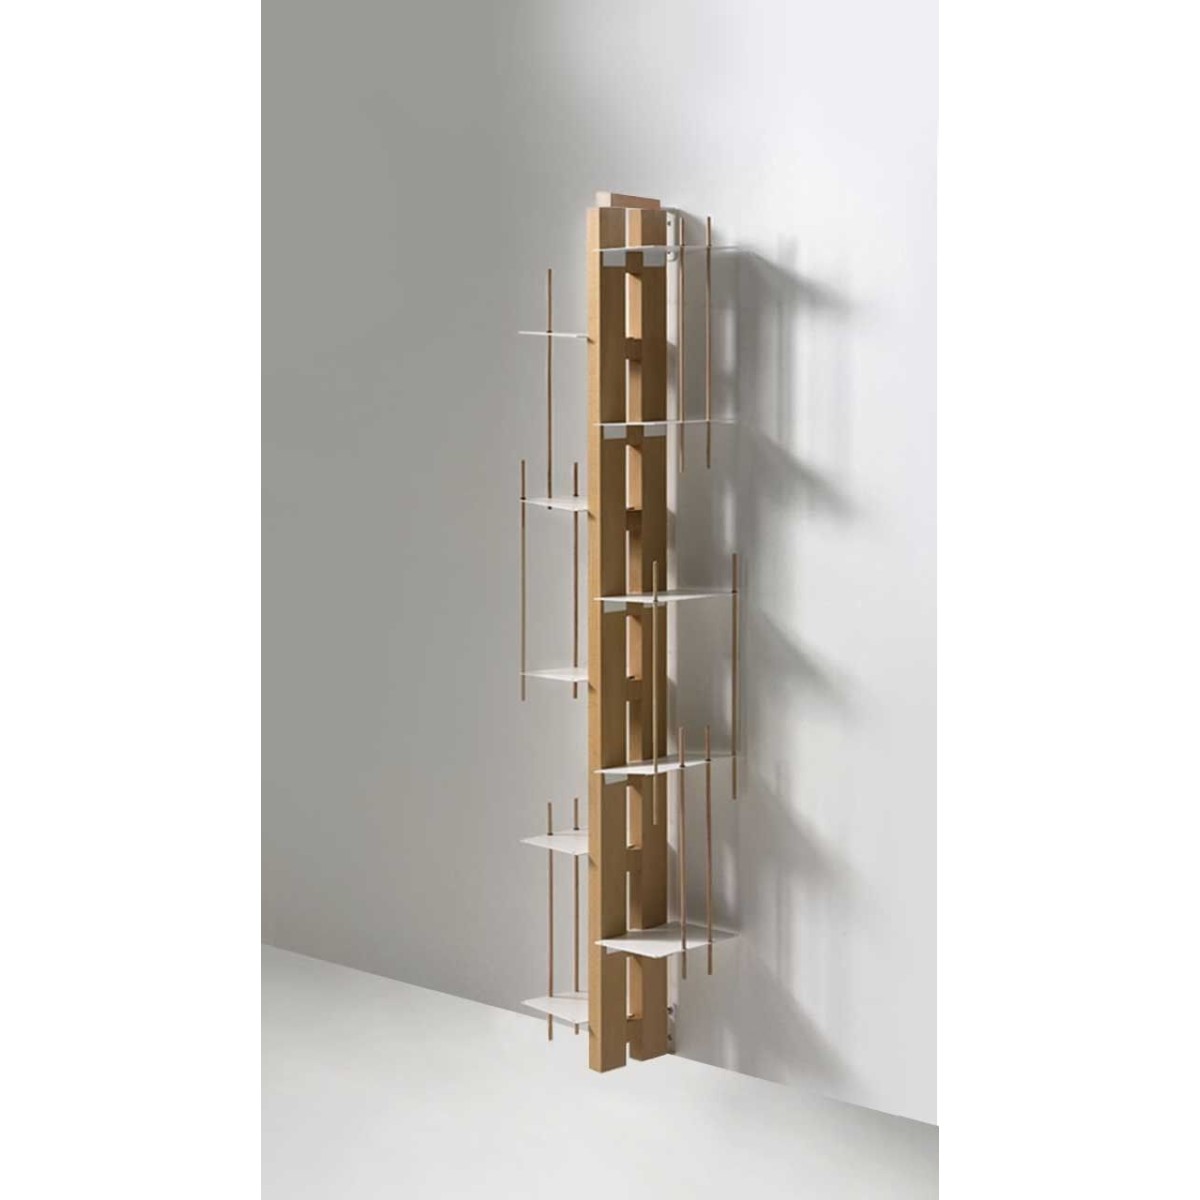 Zia Veronica SF libreria in legno verticale sospesa h105cm 7 ripiani